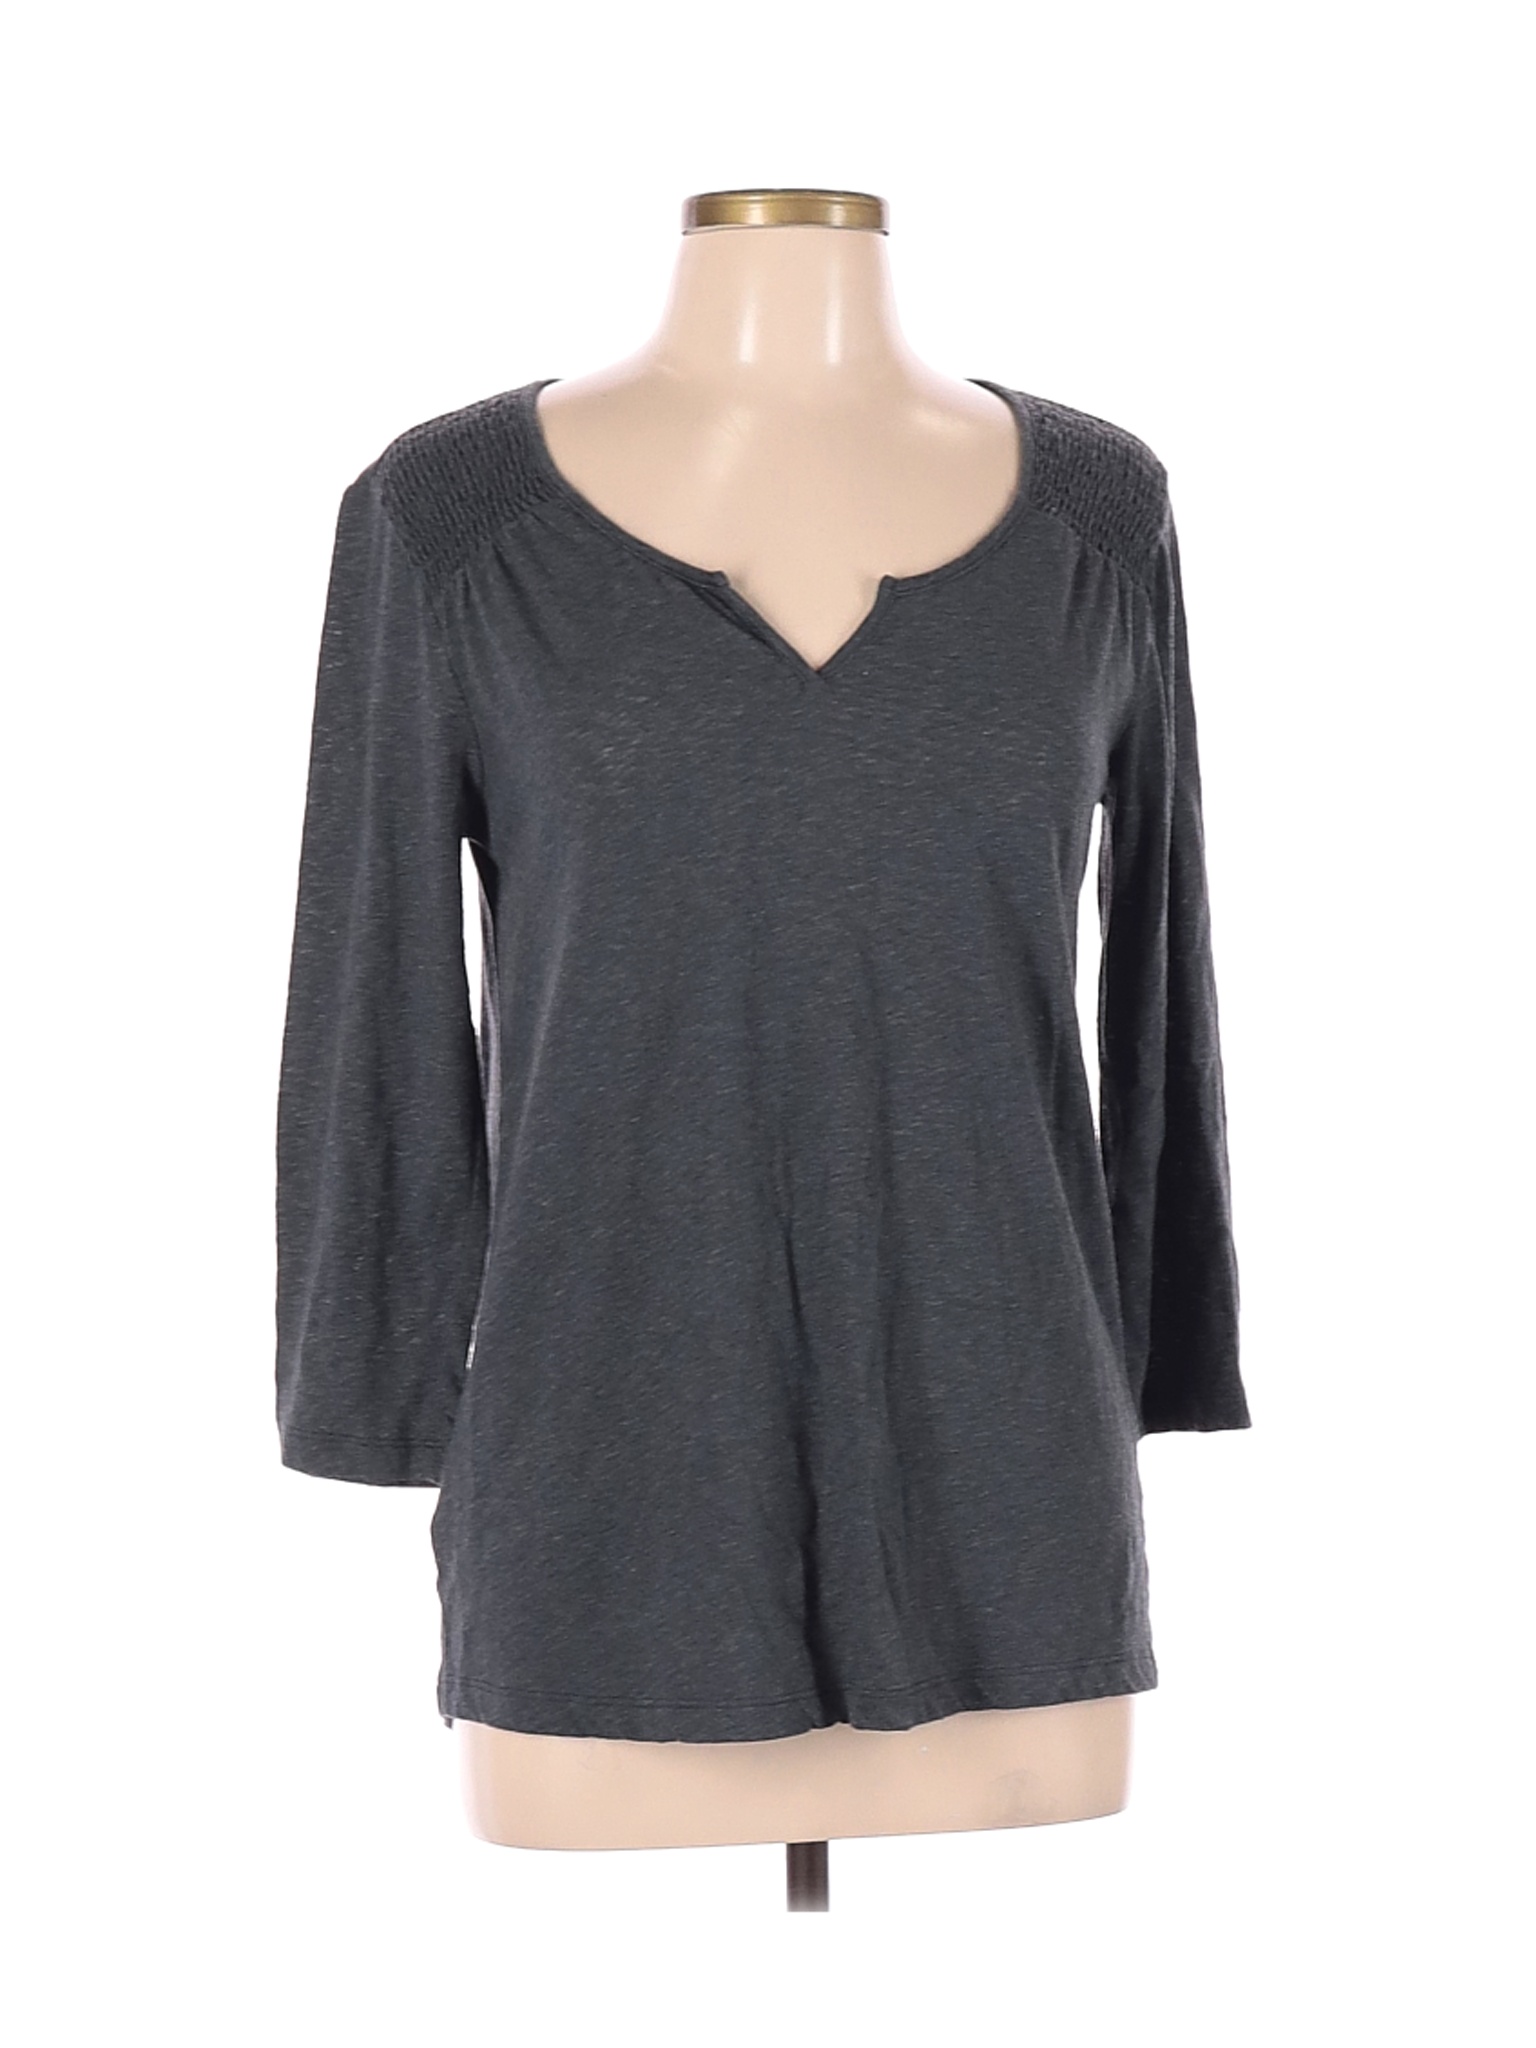 Eddie Bauer Women Gray Long Sleeve T-Shirt L | eBay